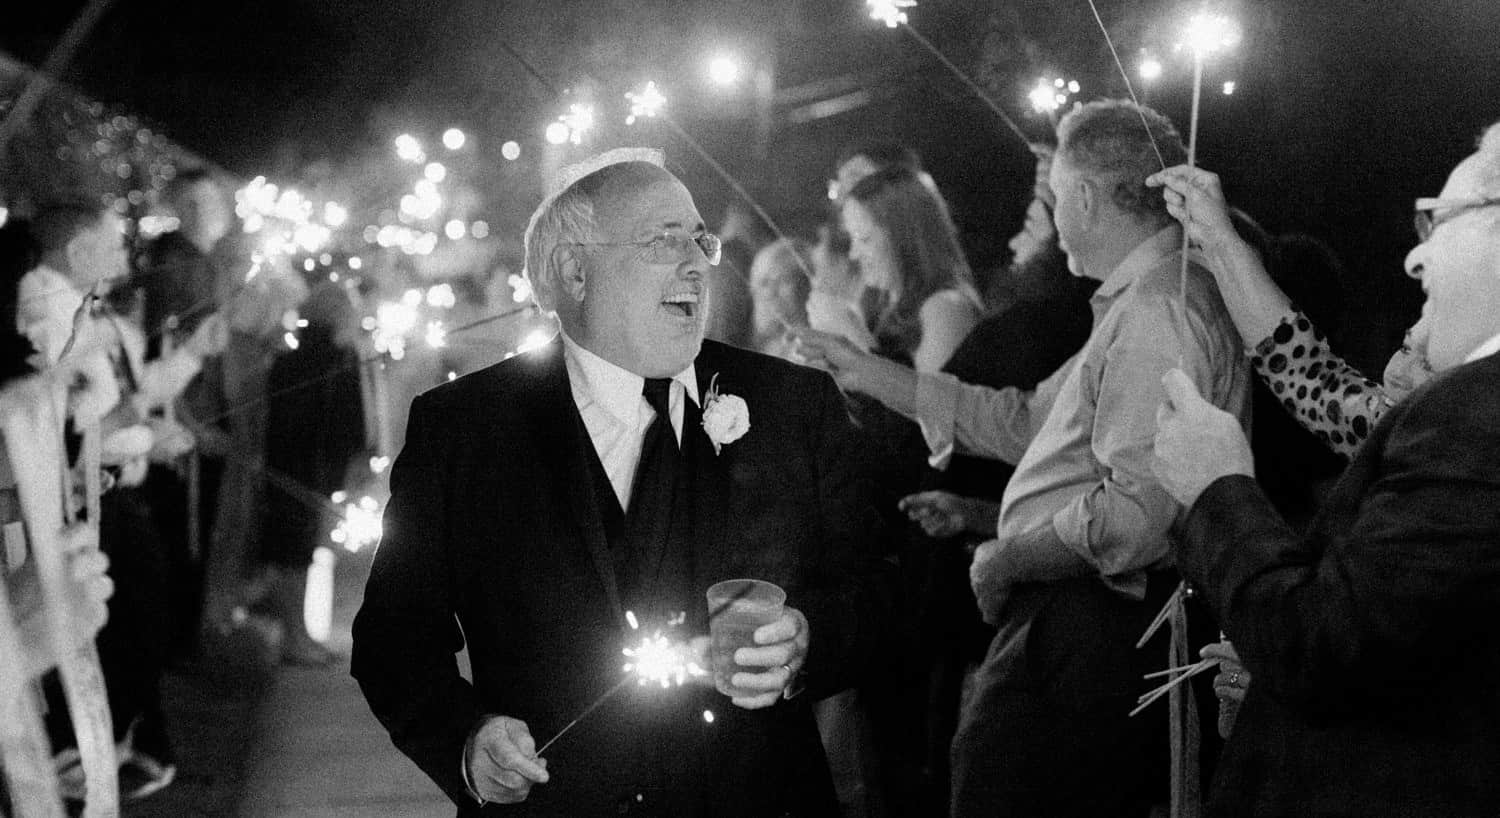 Wedding guests holding sparklers